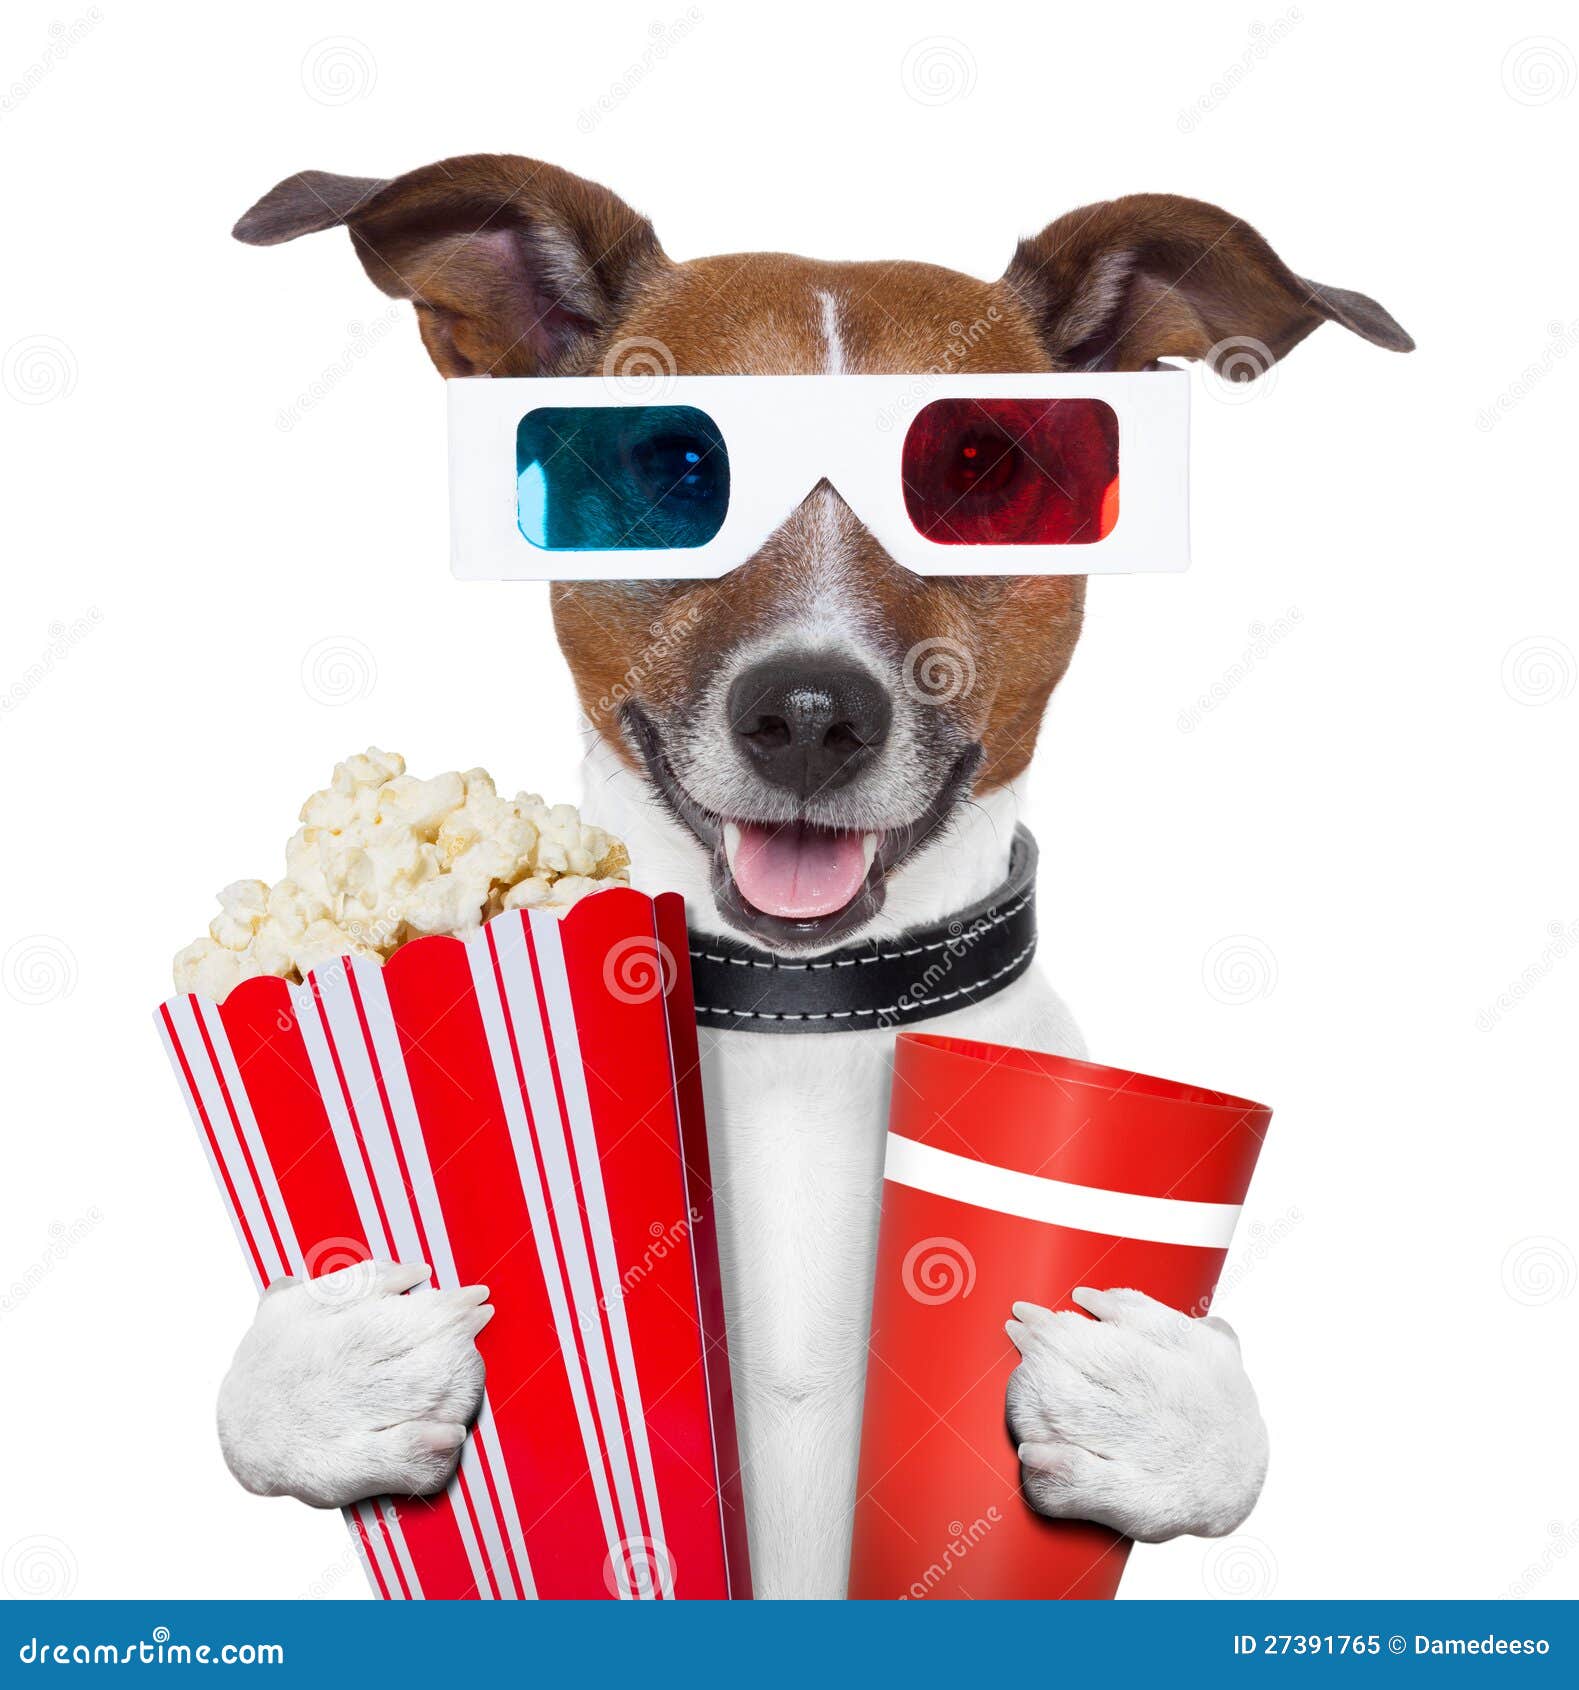 http://thumbs.dreamstime.com/z/3d-glasses-movie-popcorn-dog-27391765.jpg